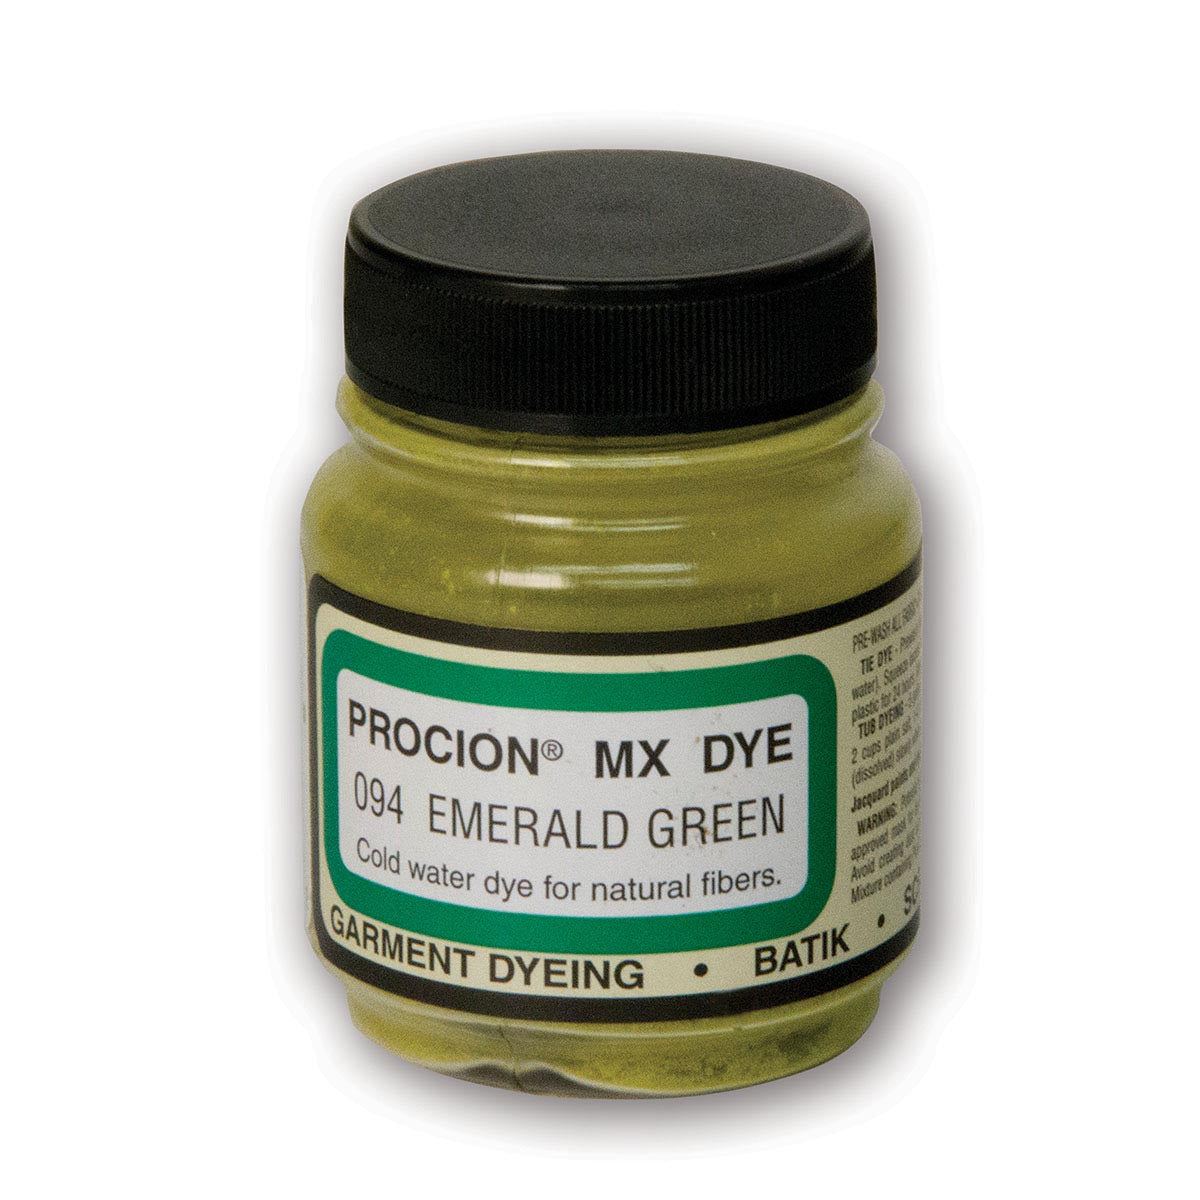 Jacquard - Procion MX Dye - Stoff Textil - Smaragd 094